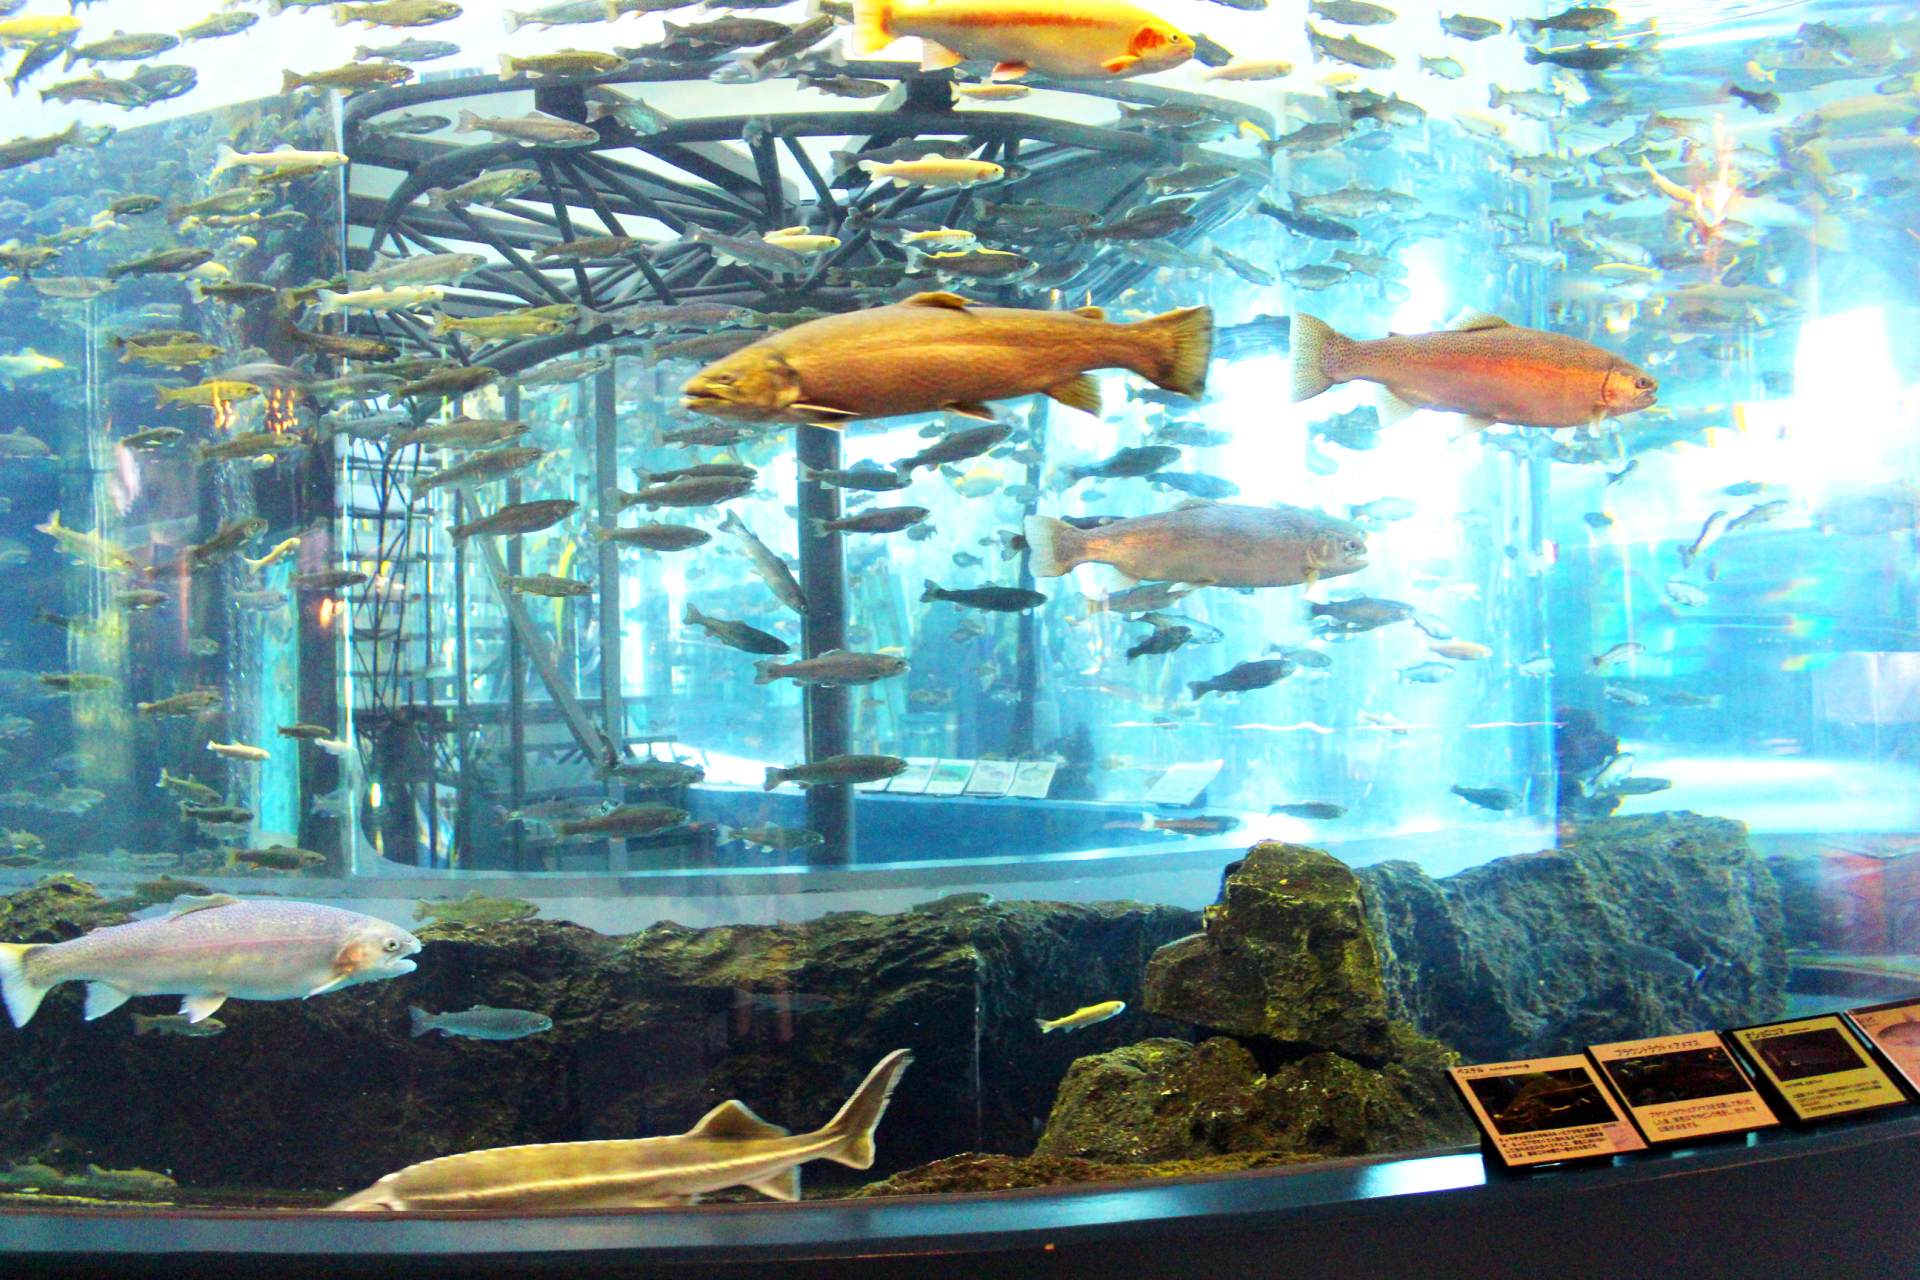 Fuji Spring Water Aquarium Must See Trip Plans Access Hours Price Good Luck Trip